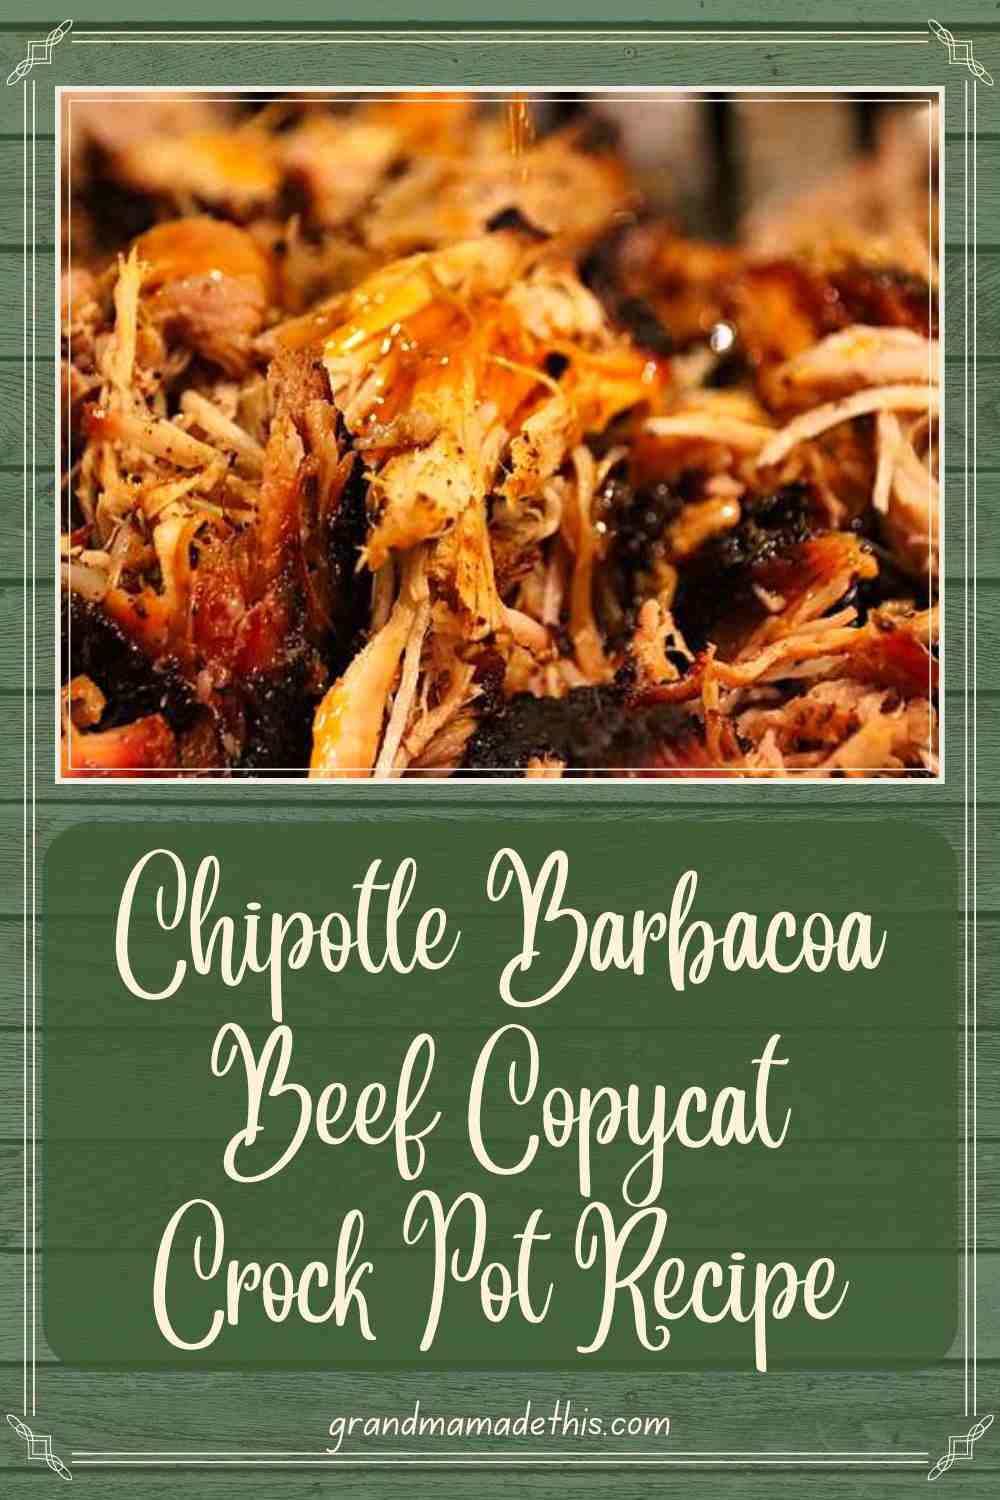 Chipotle Barbacoa Beef Copycat Crock Pot Recipe